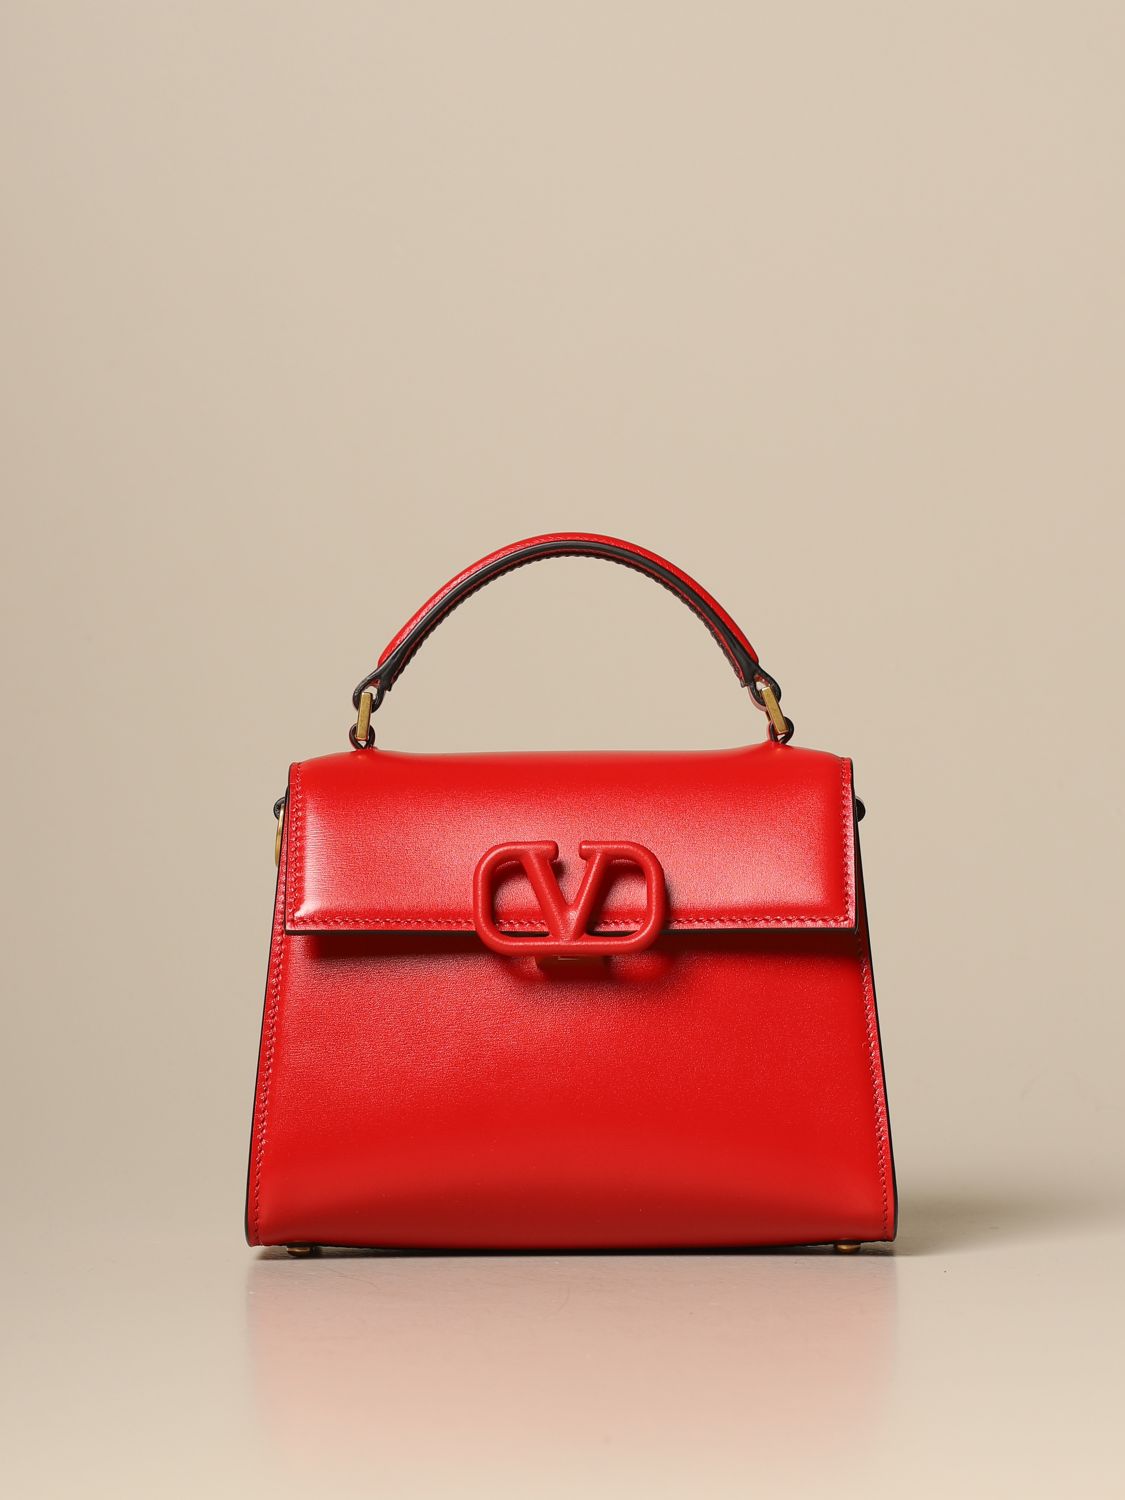 NWT Valentino Garavani Red Large VSLING Hobo Bag in Grainy Leather. $3295